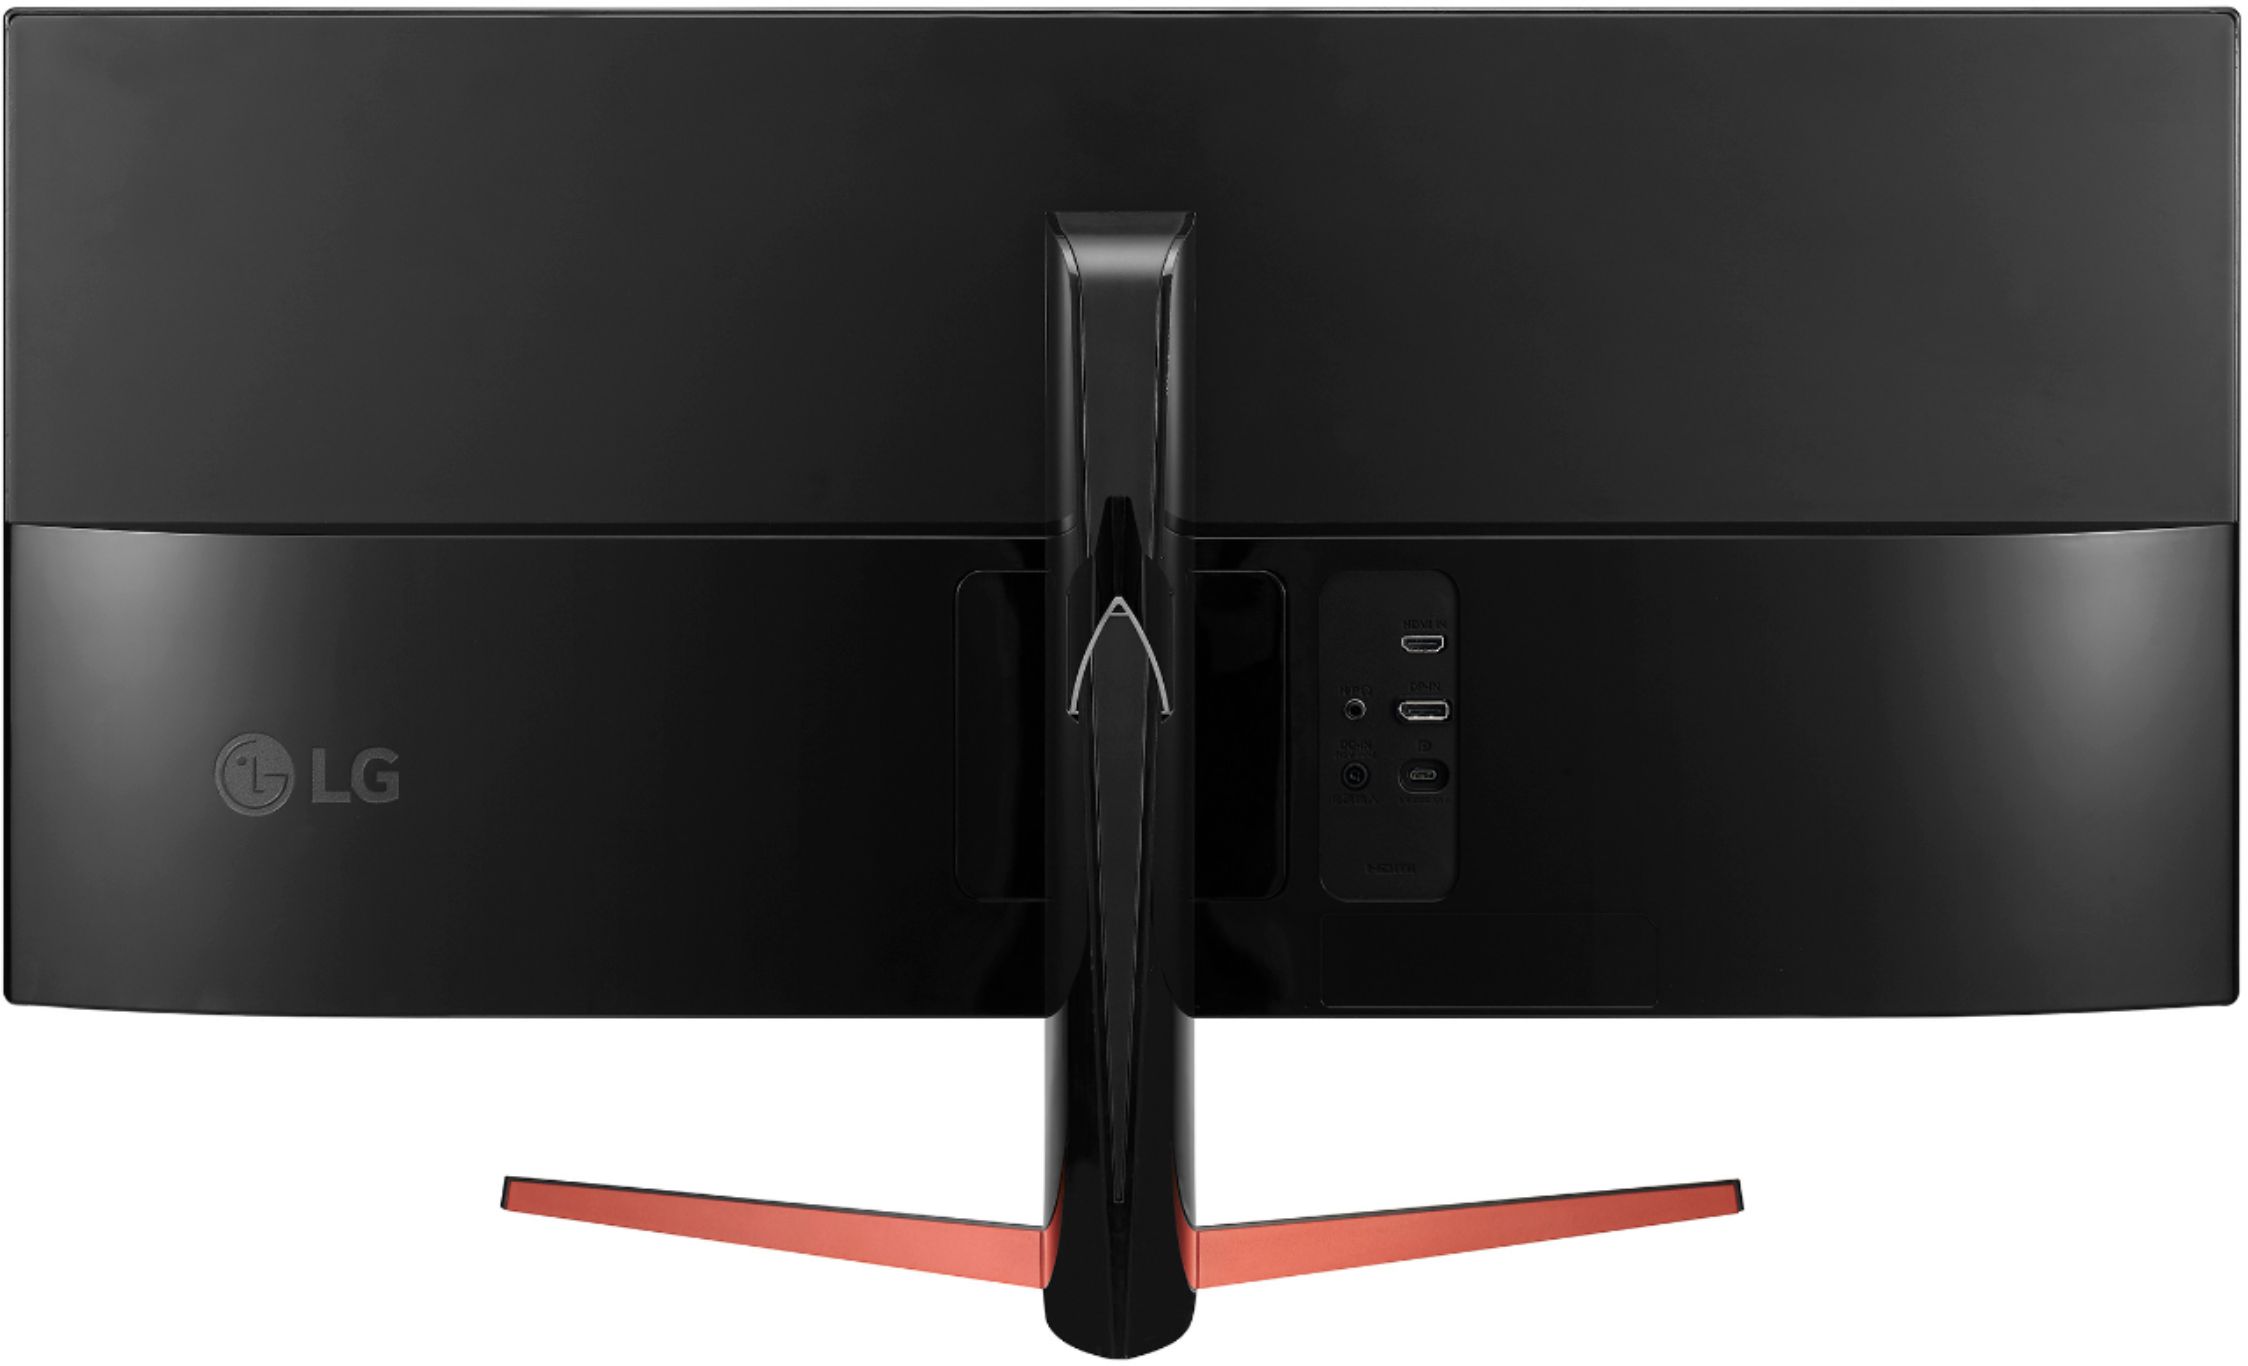 Back View: LG - 34" IPS LCD UltraWide FHD FreeSync Monitor (DisplayPort, HDMI) - Black